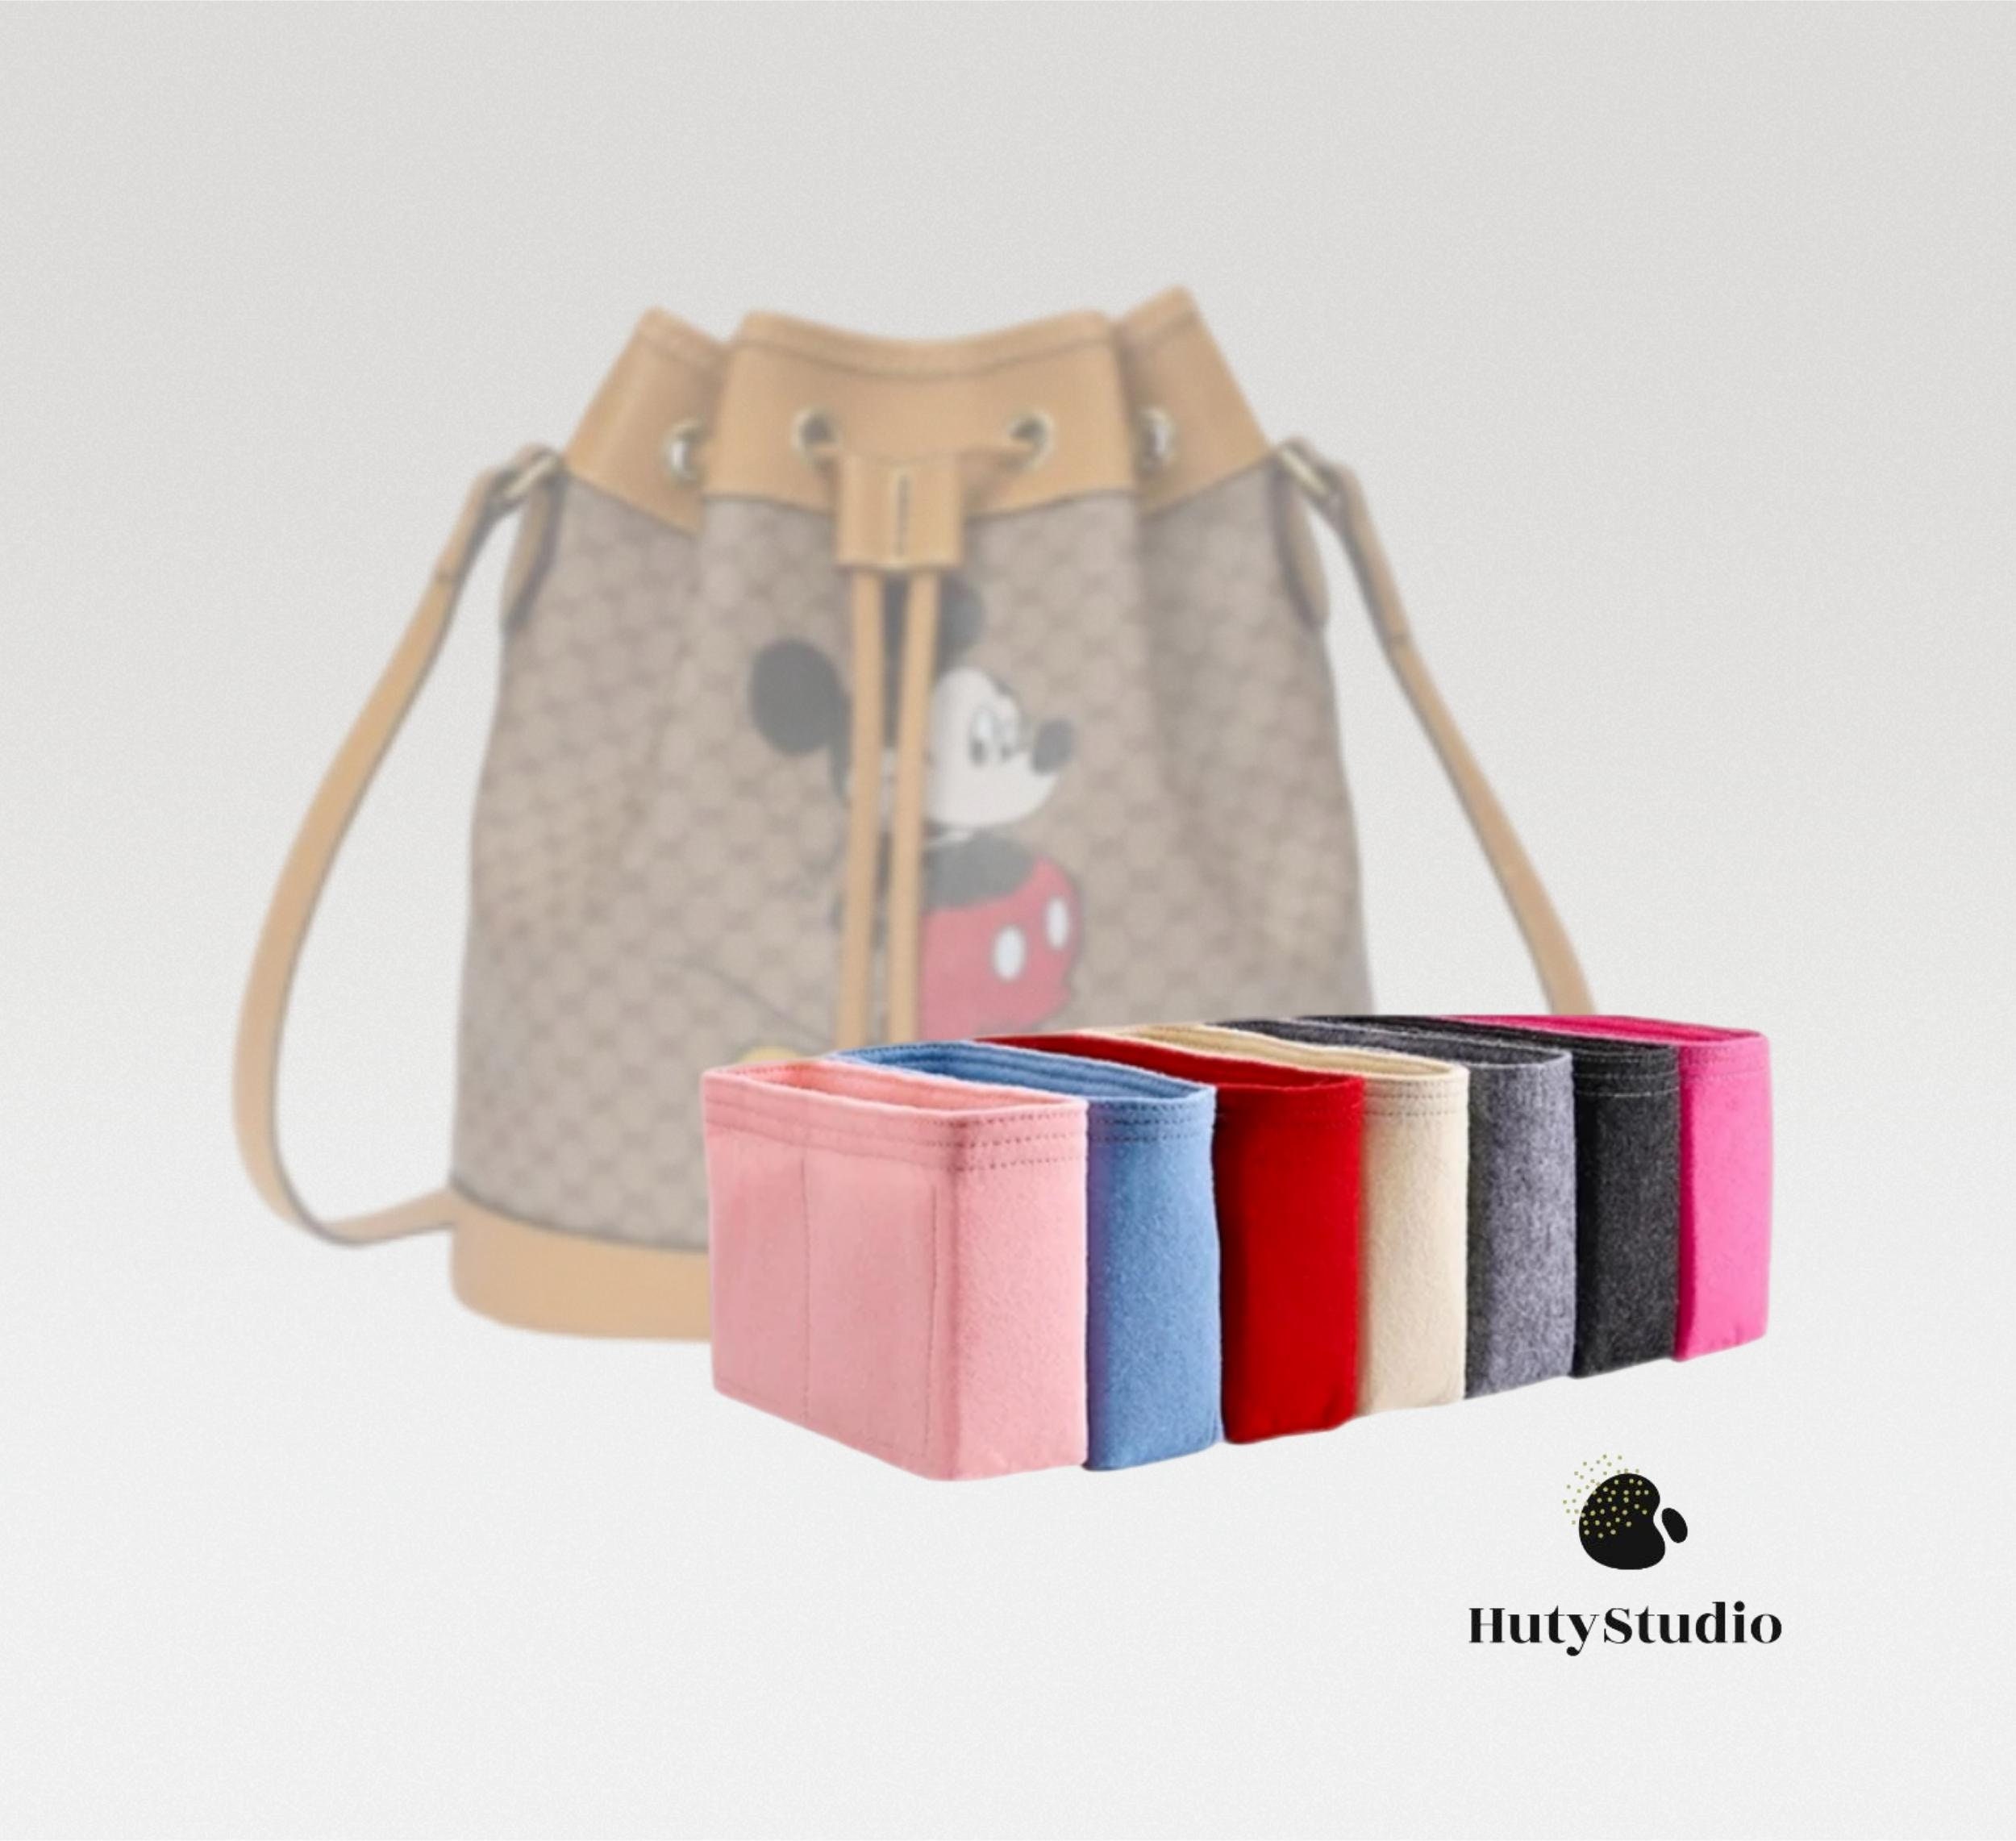 Gucci Mickey Bag 